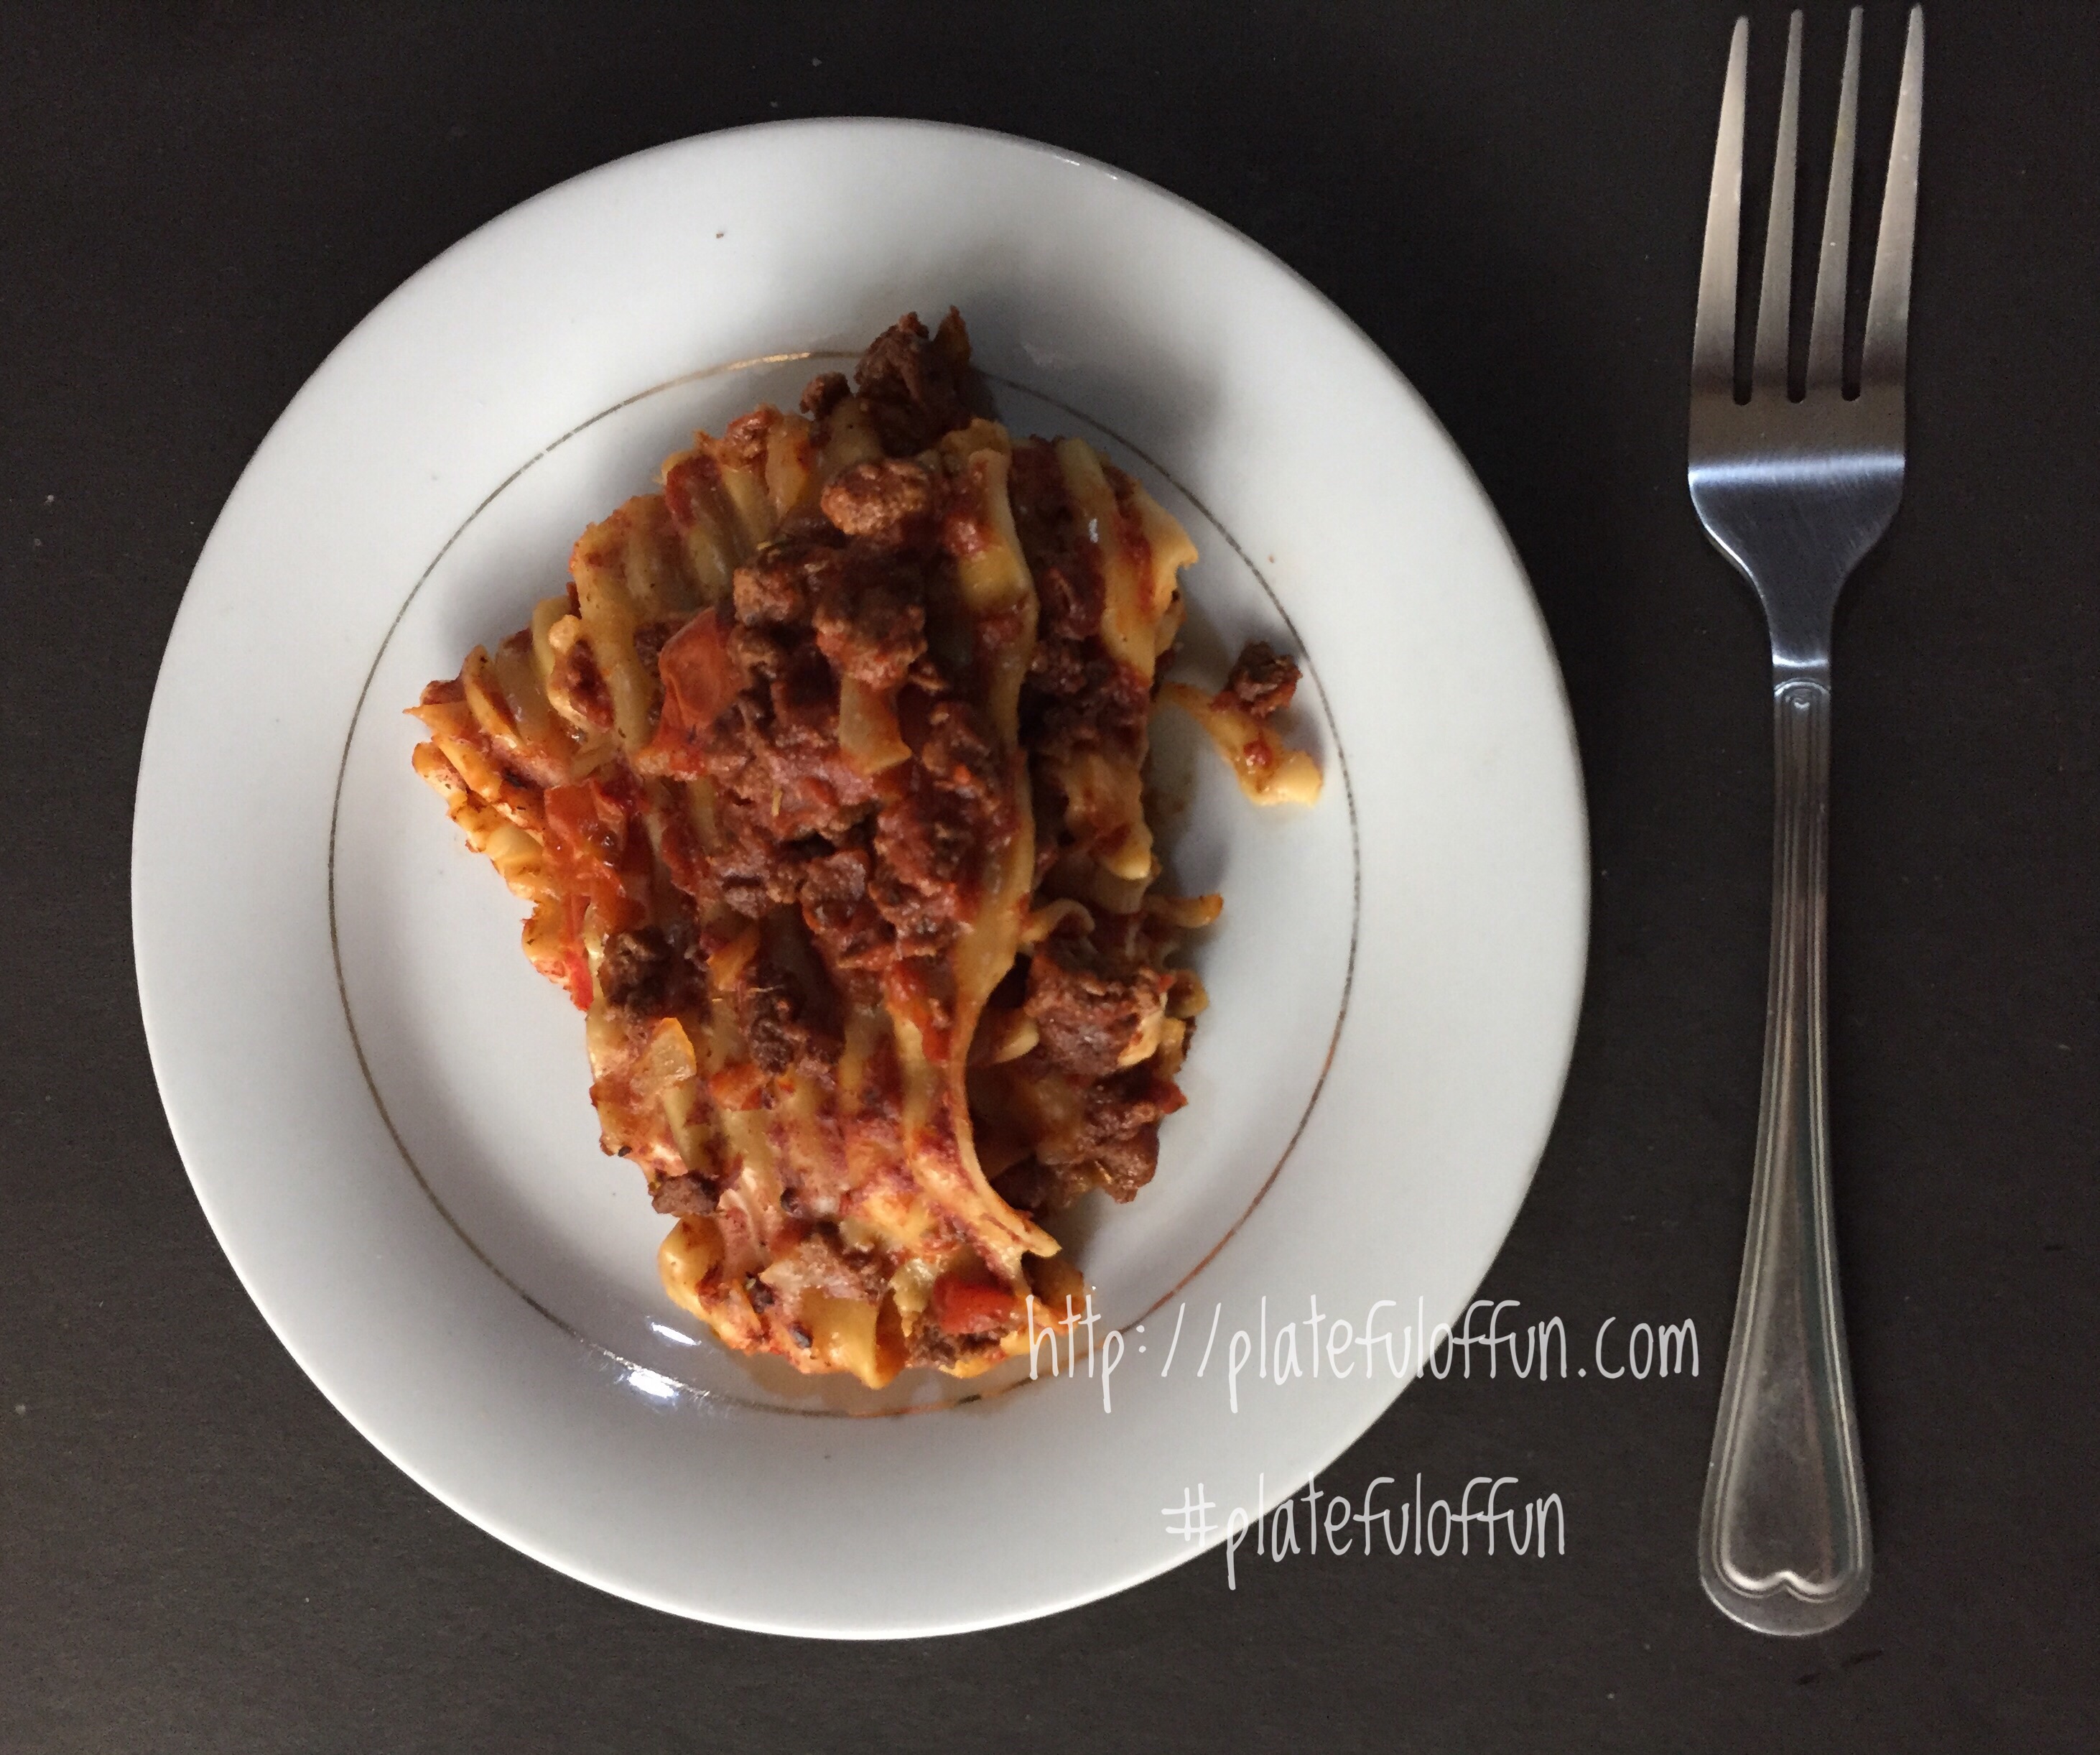 Plateful Of Fun » Blog Archive » Slow Cooker Lasagna